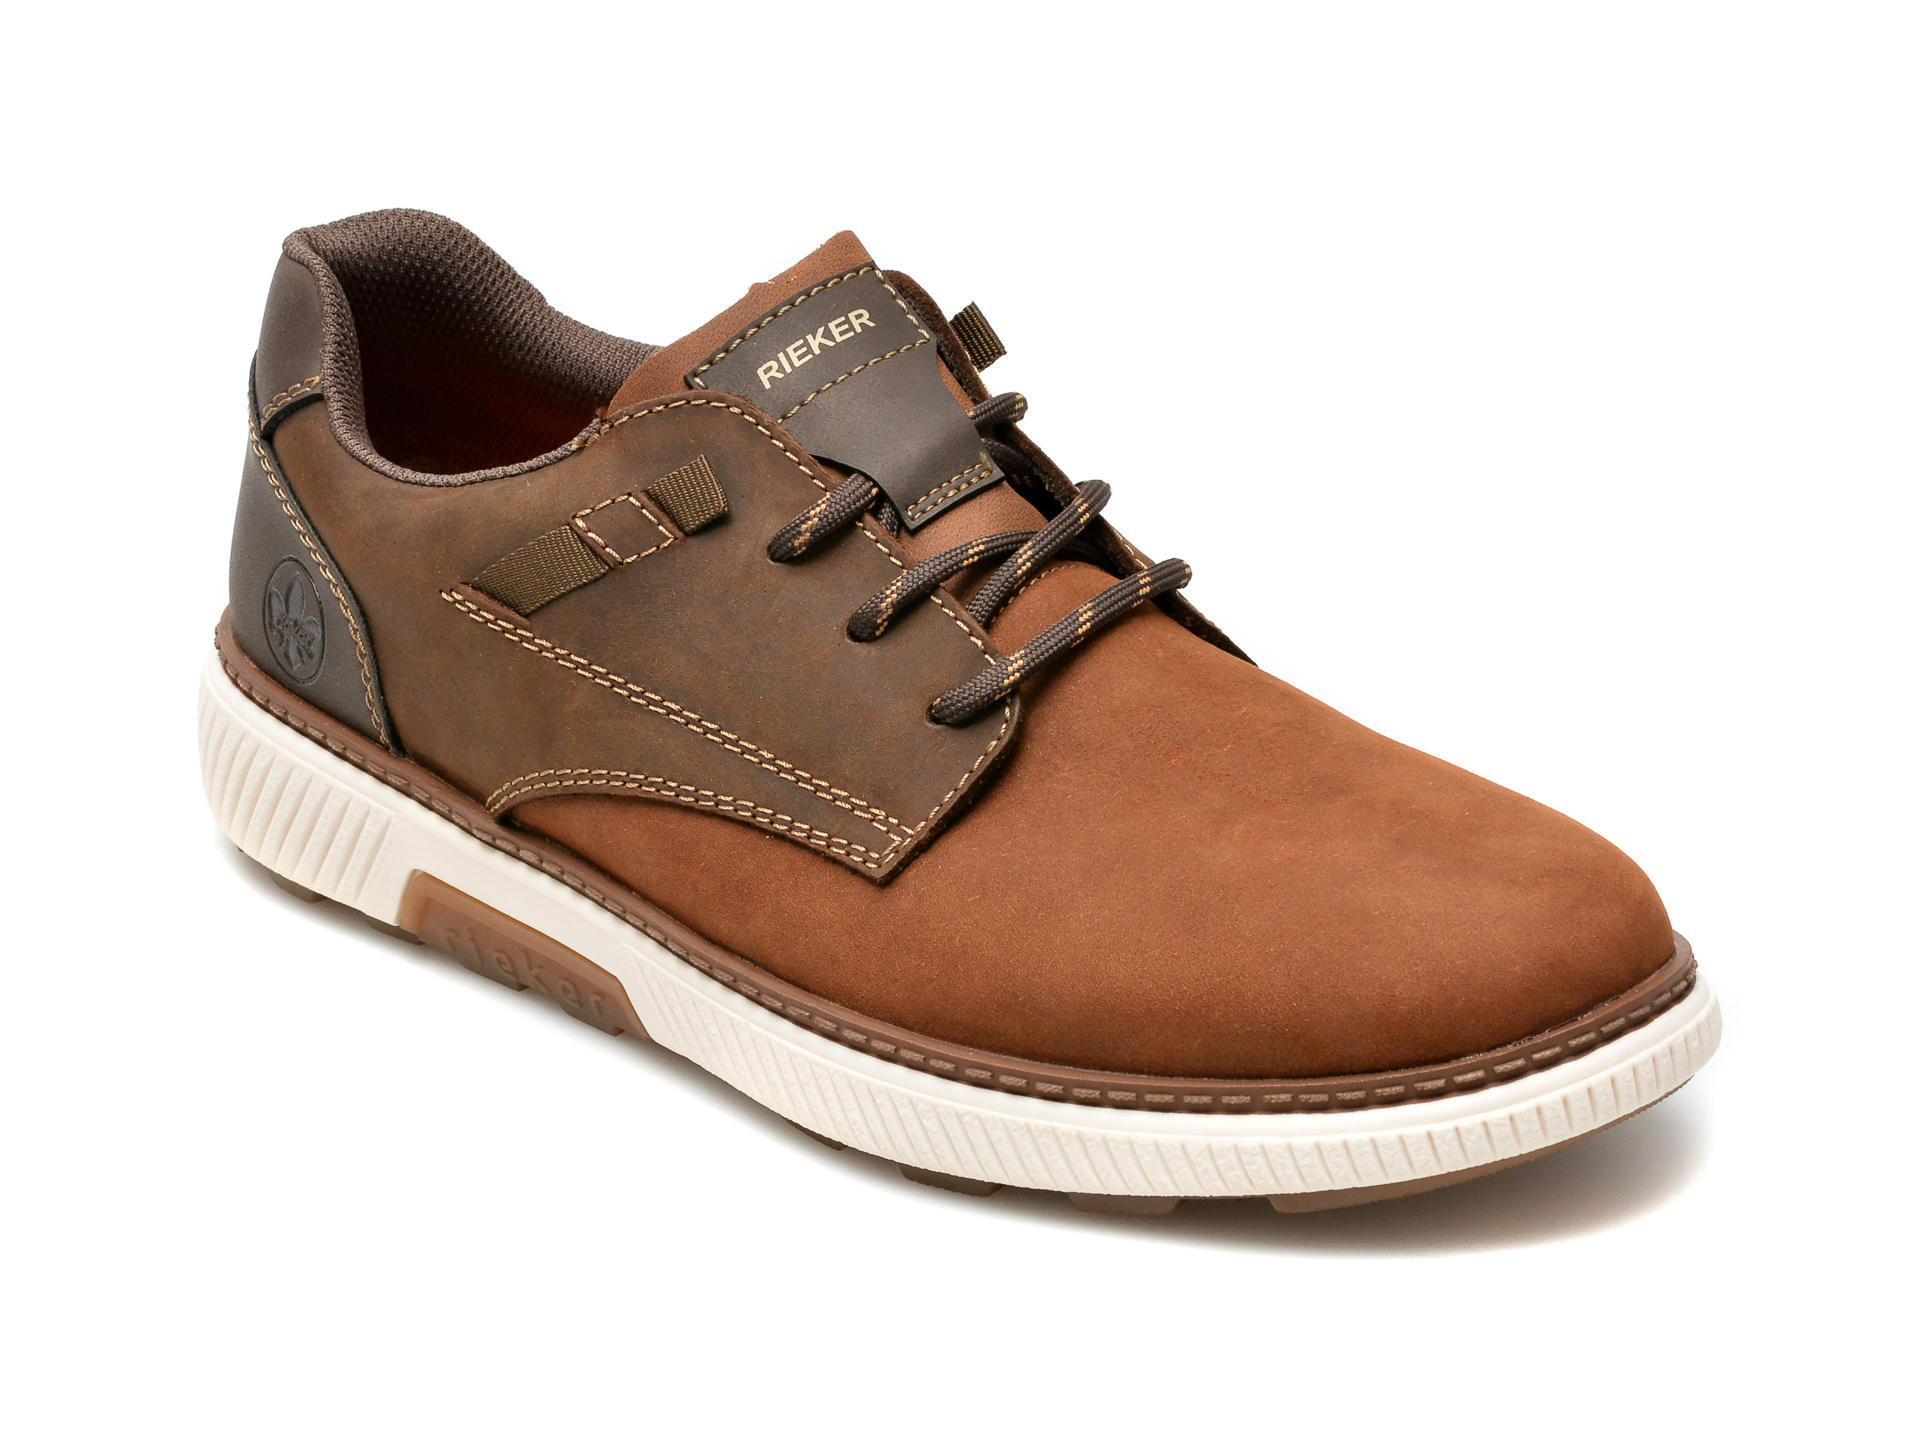 Pantofi RIEKER maro, B3320, din piele naturala /barbati/pantofi